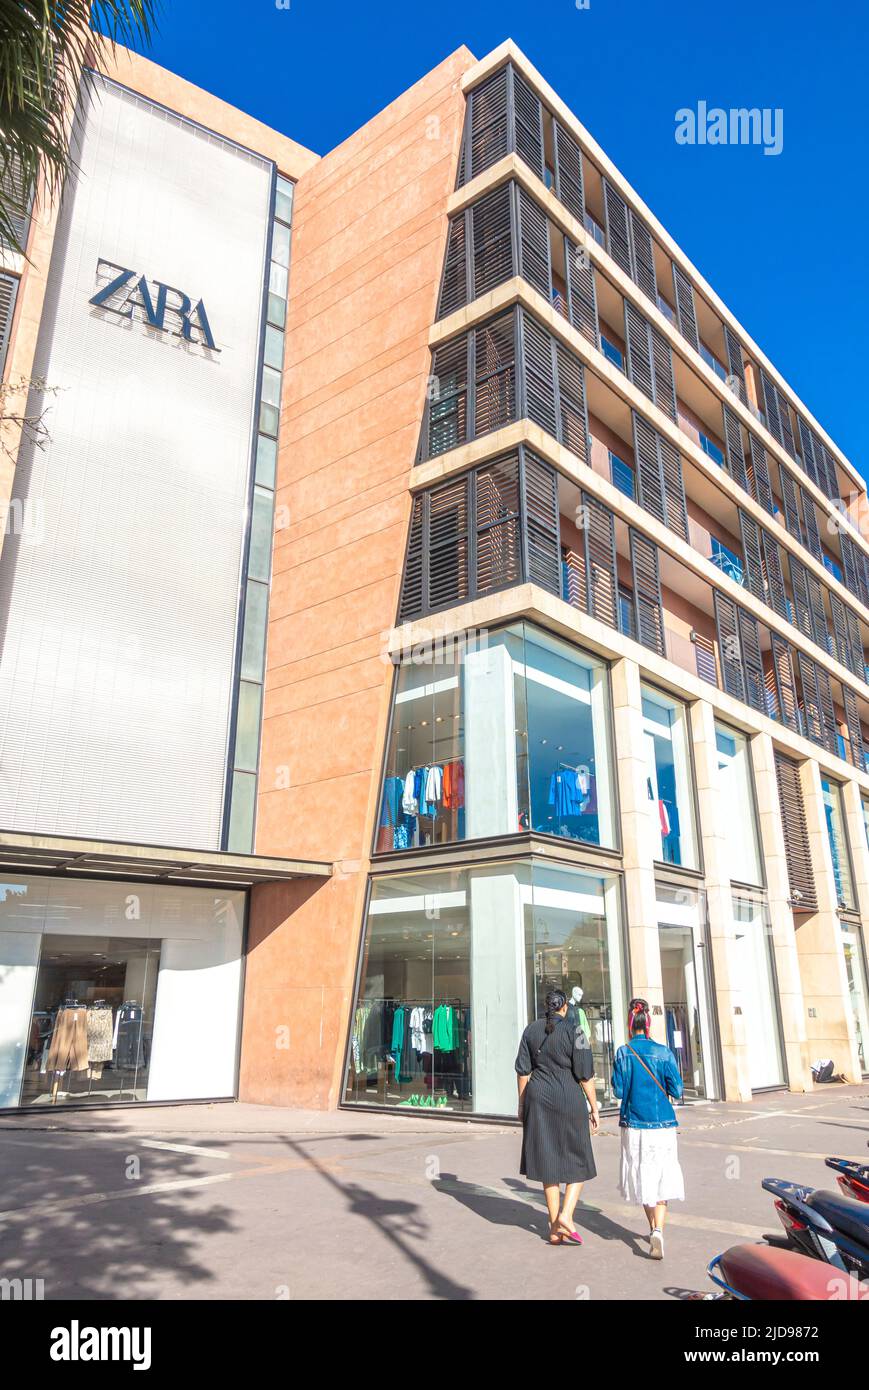 Zara fashion store, Marrakech, Morocco Stock Photo - Alamy